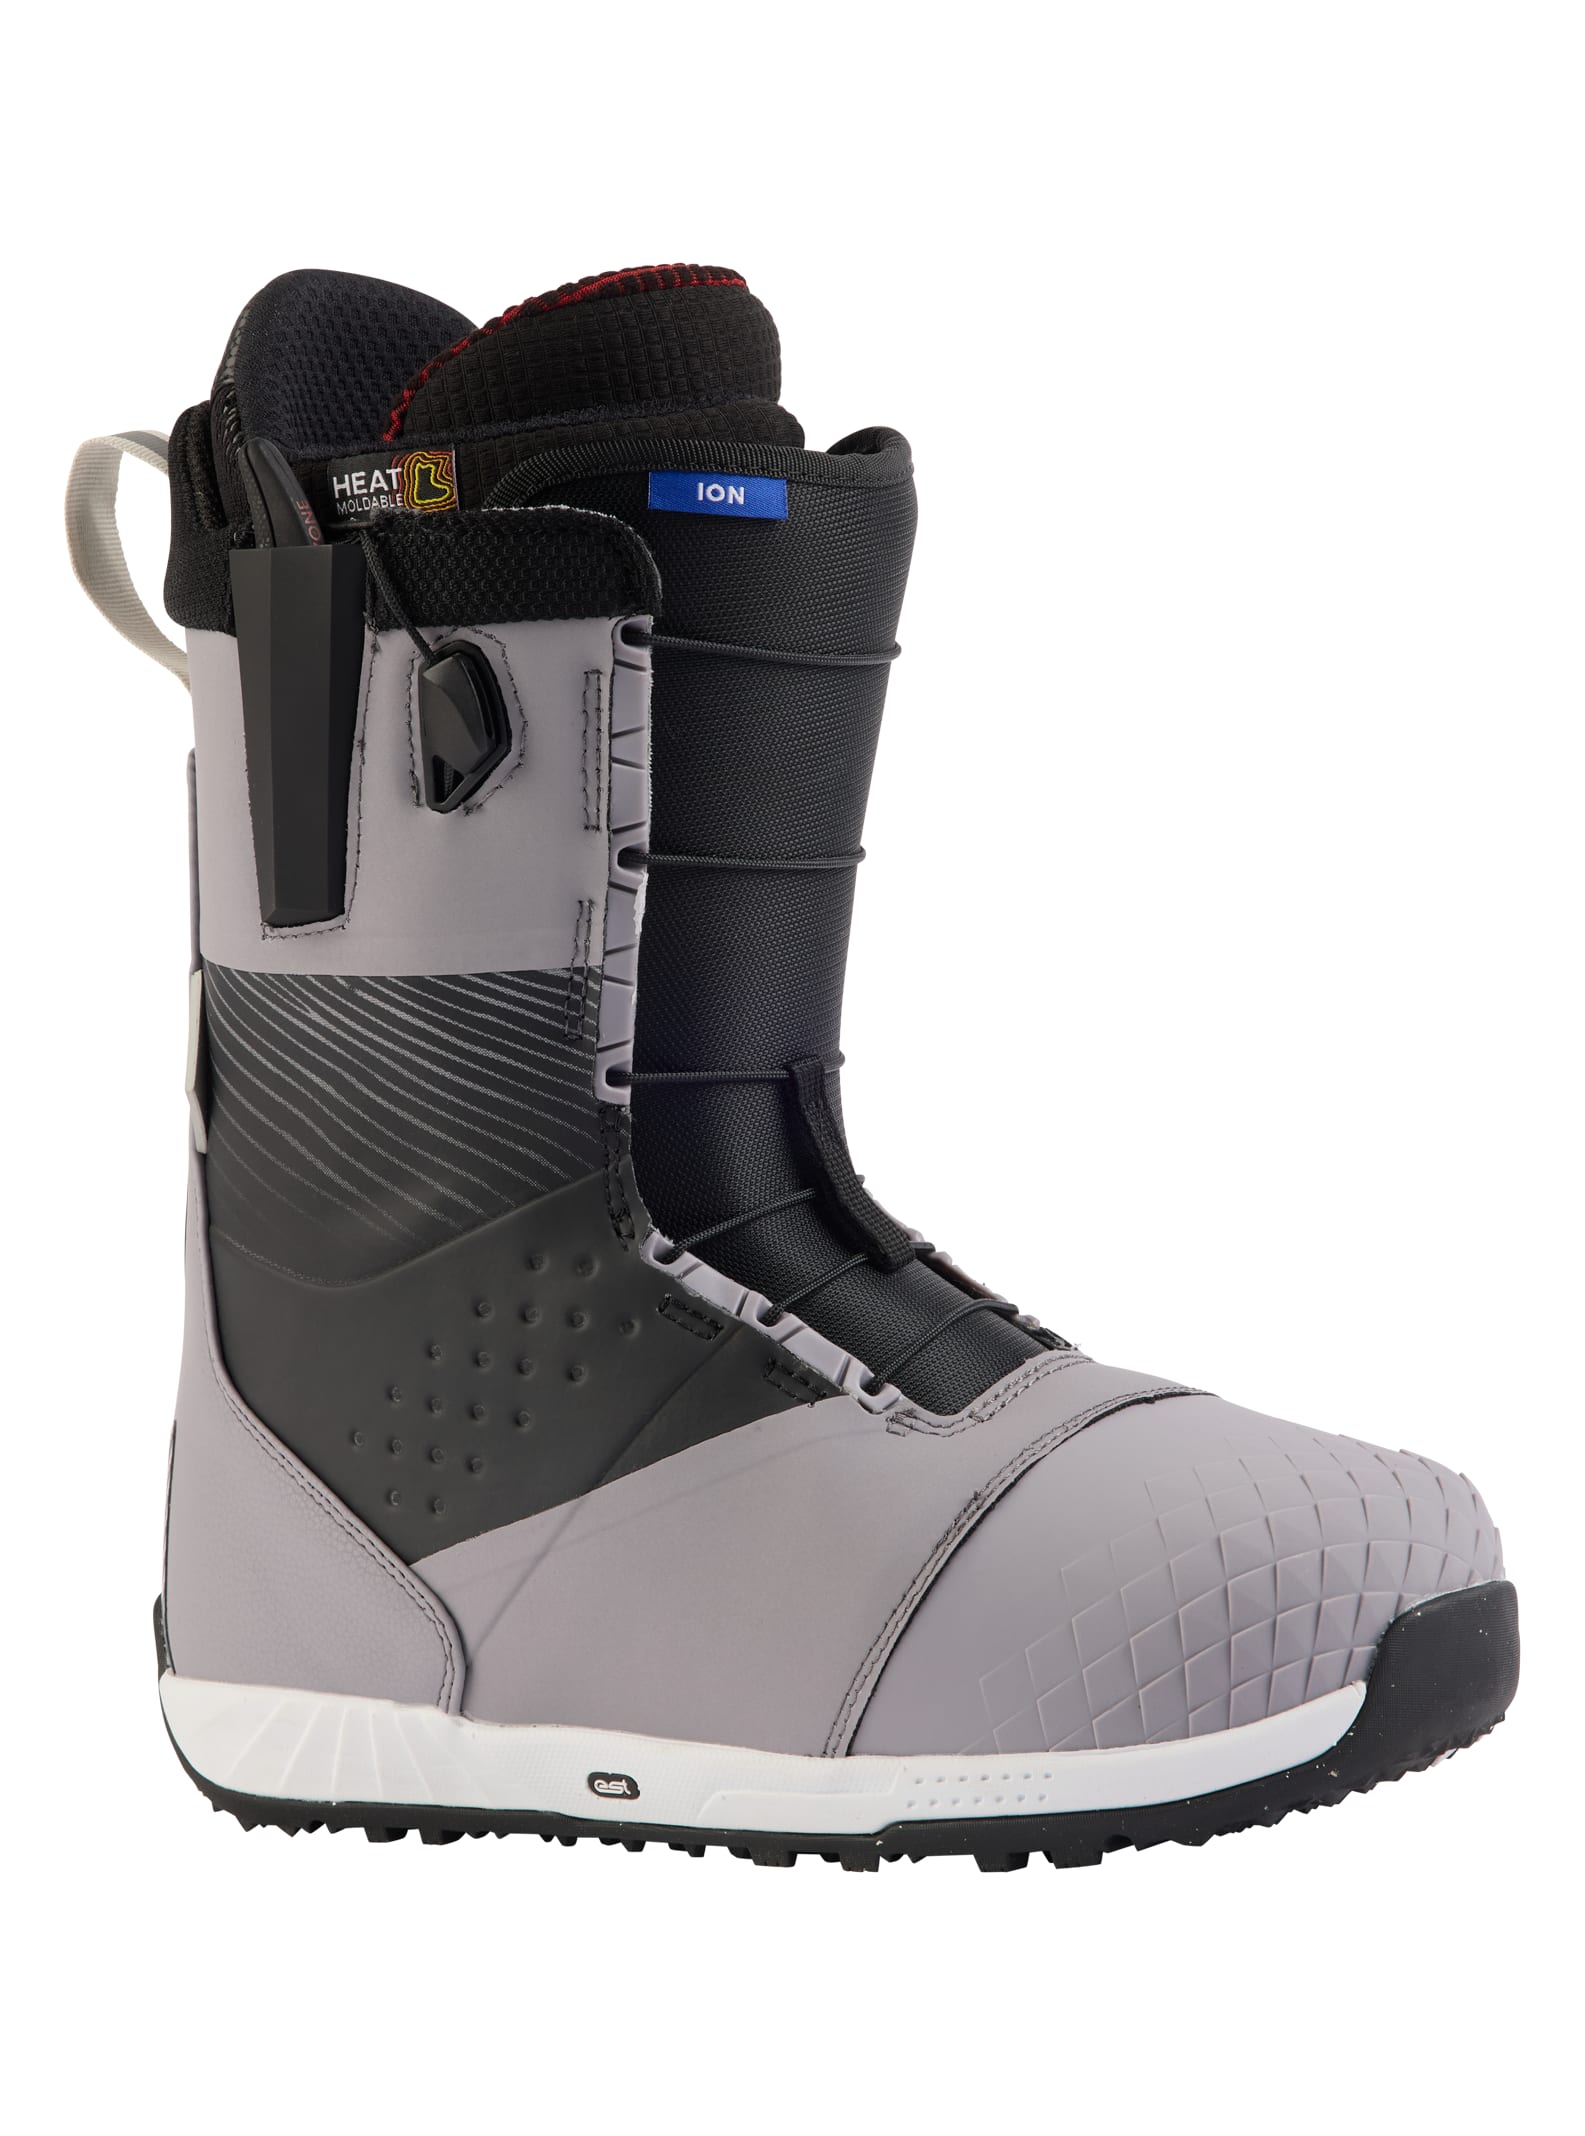 Men's Burton Ion Snowboard Boots (Wide)